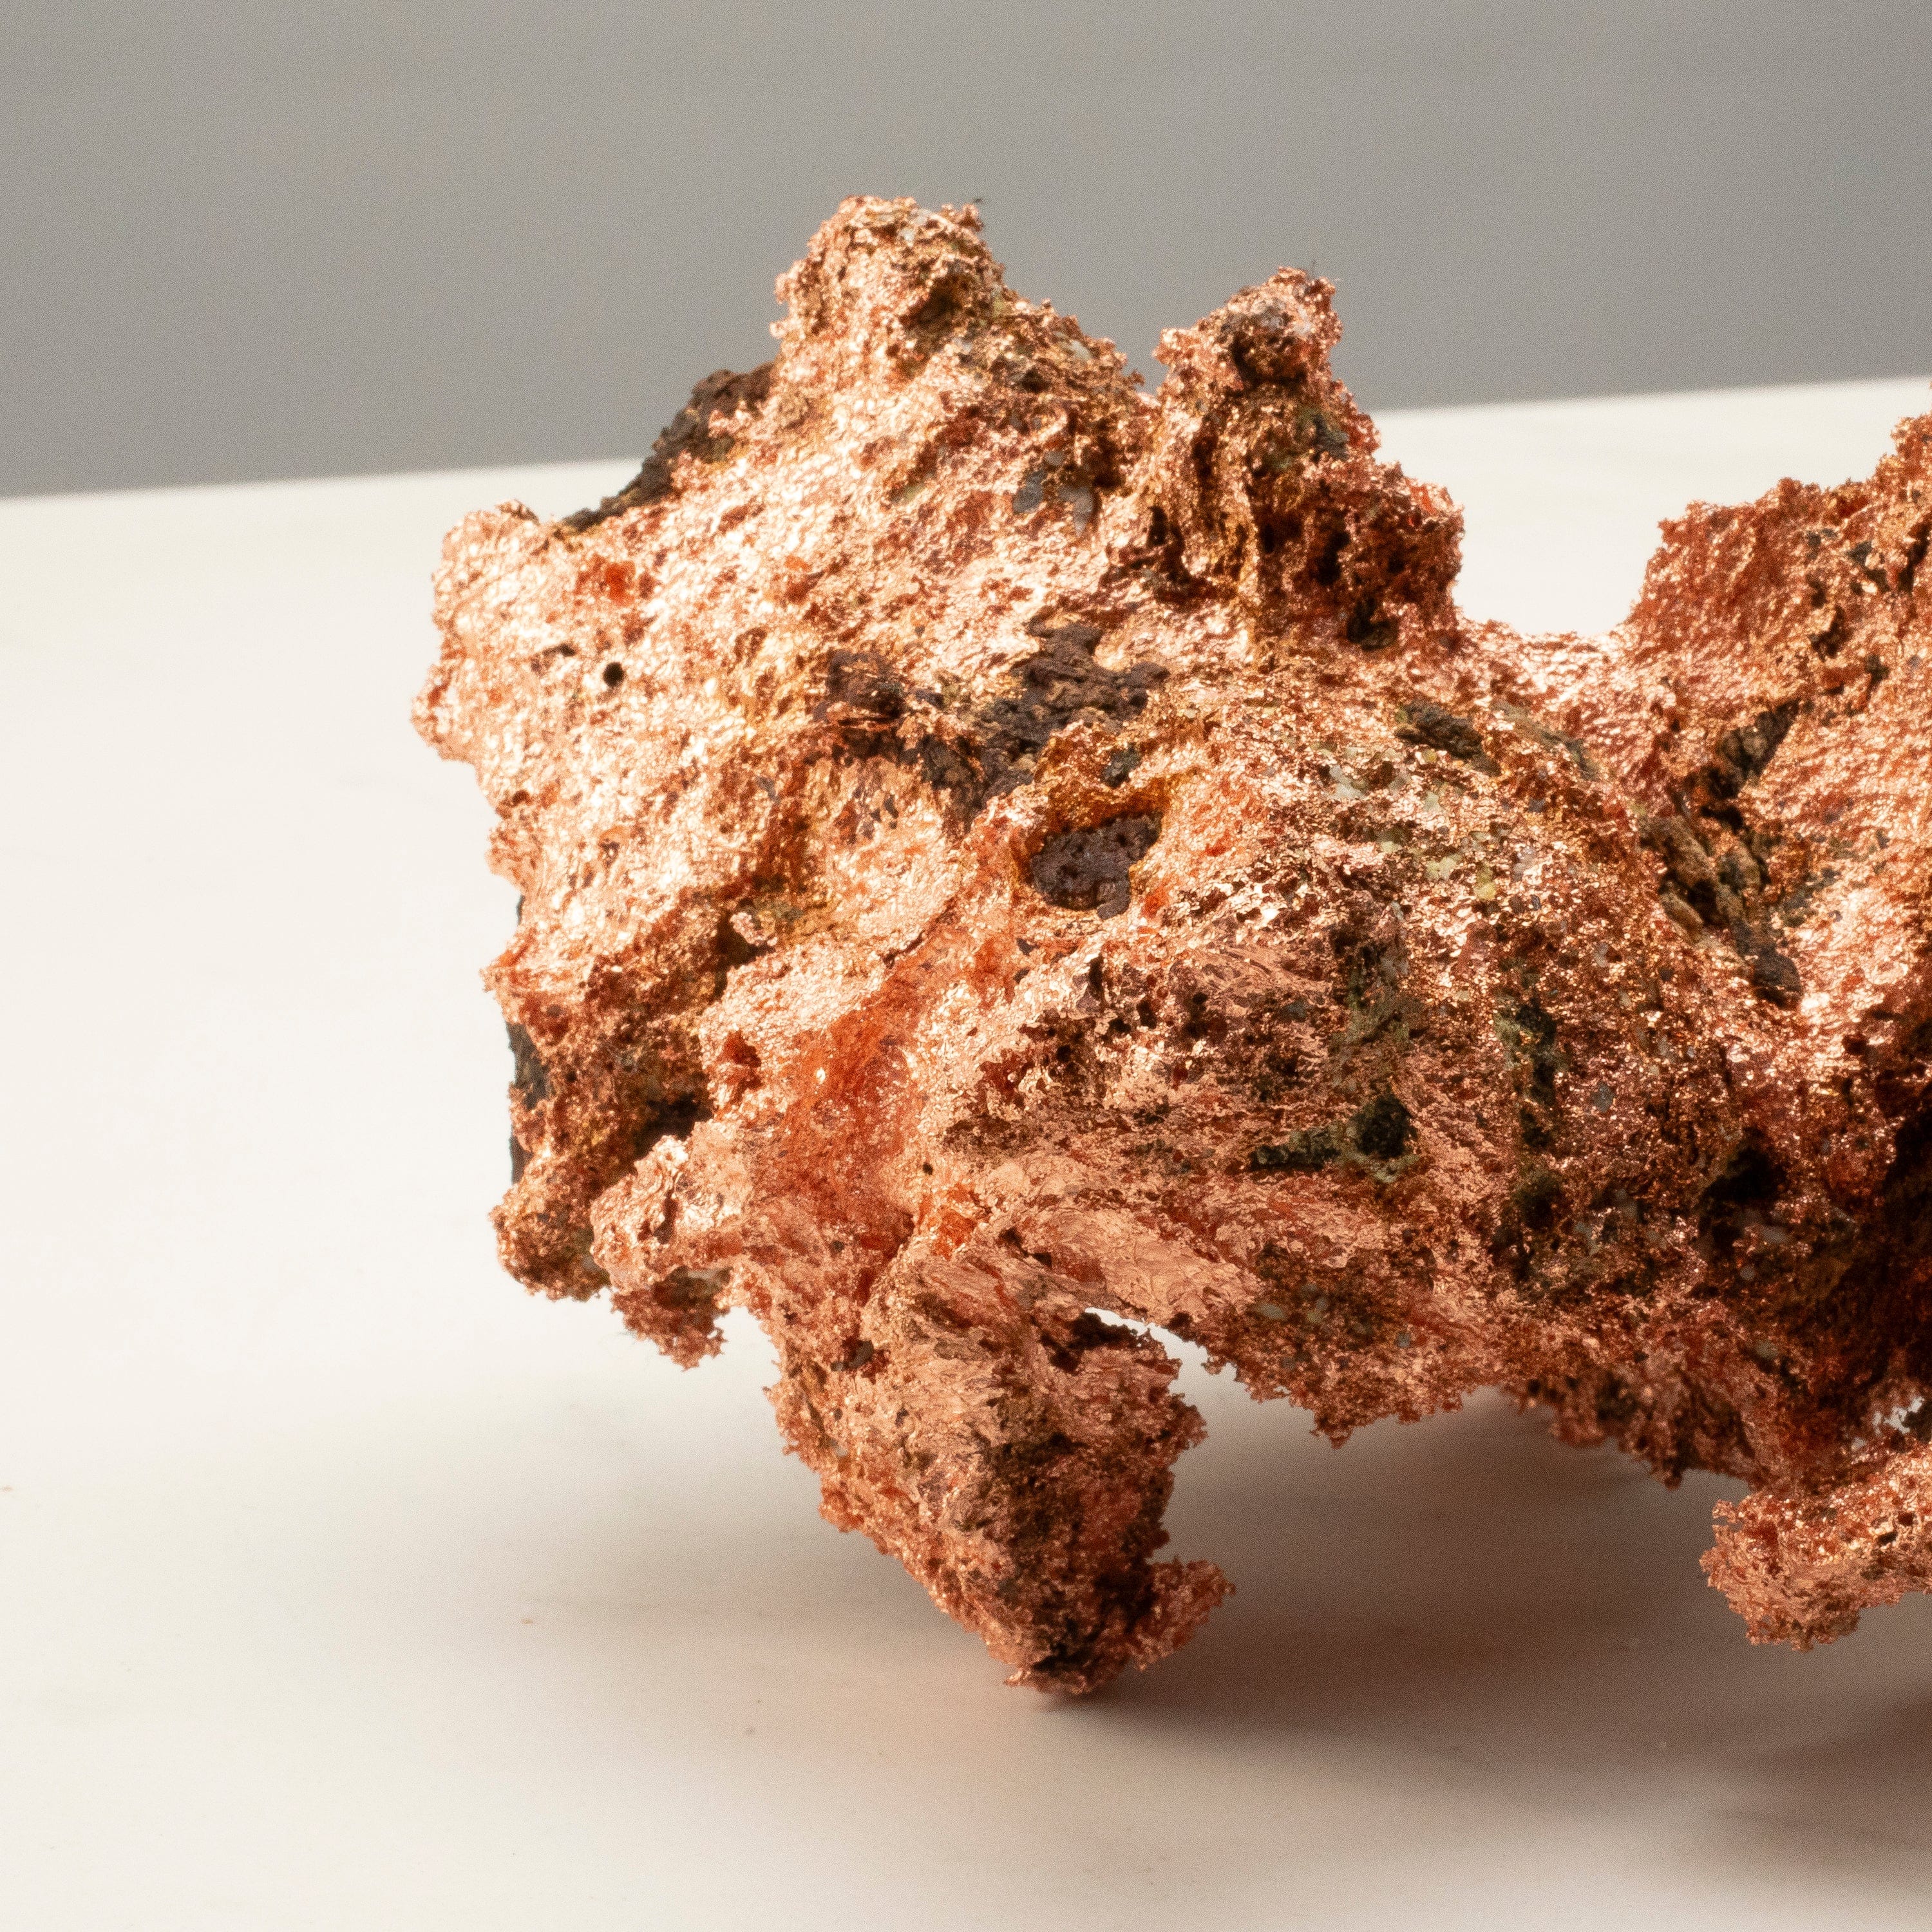 Kalifano Copper Native Copper from Michigan - 6.5" / 7.1lbs CPR4000.002